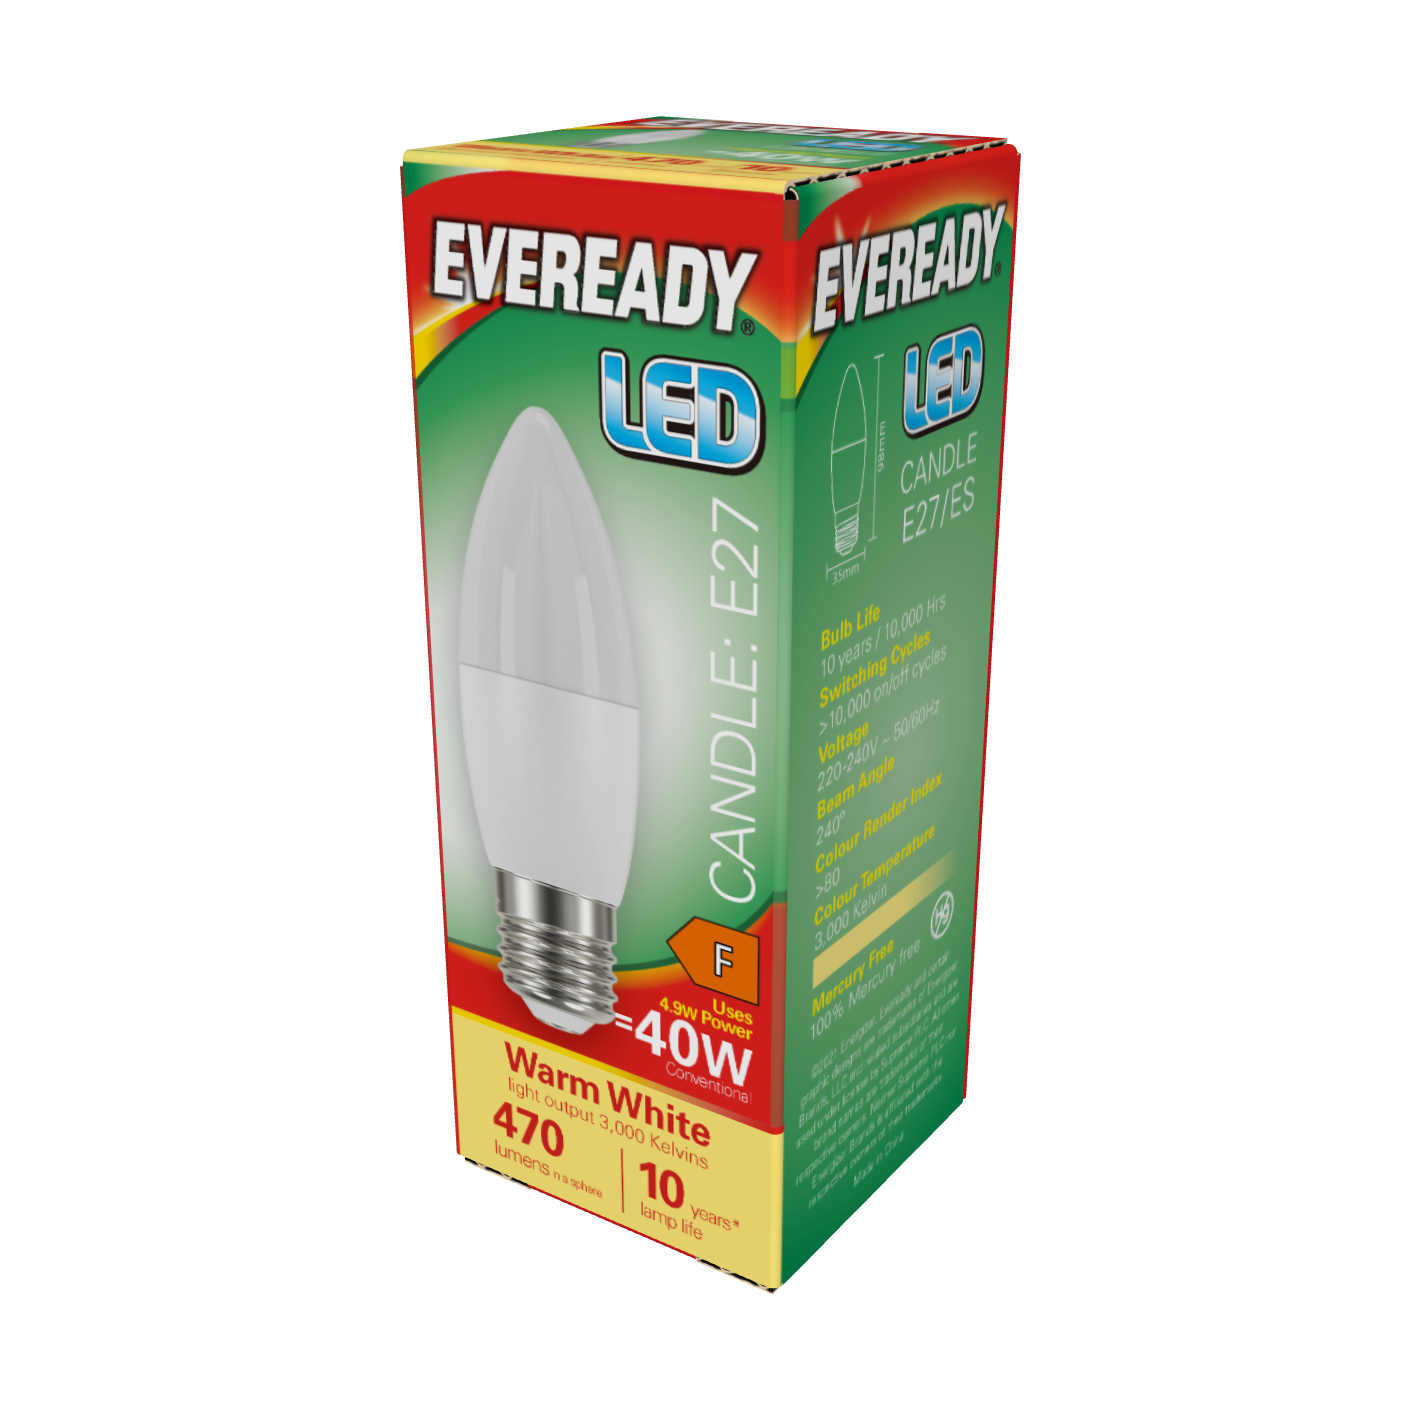 Eveready LED Candle E27 (ES) 470lm 4.9W 3,000K (Warm White), Box of 1